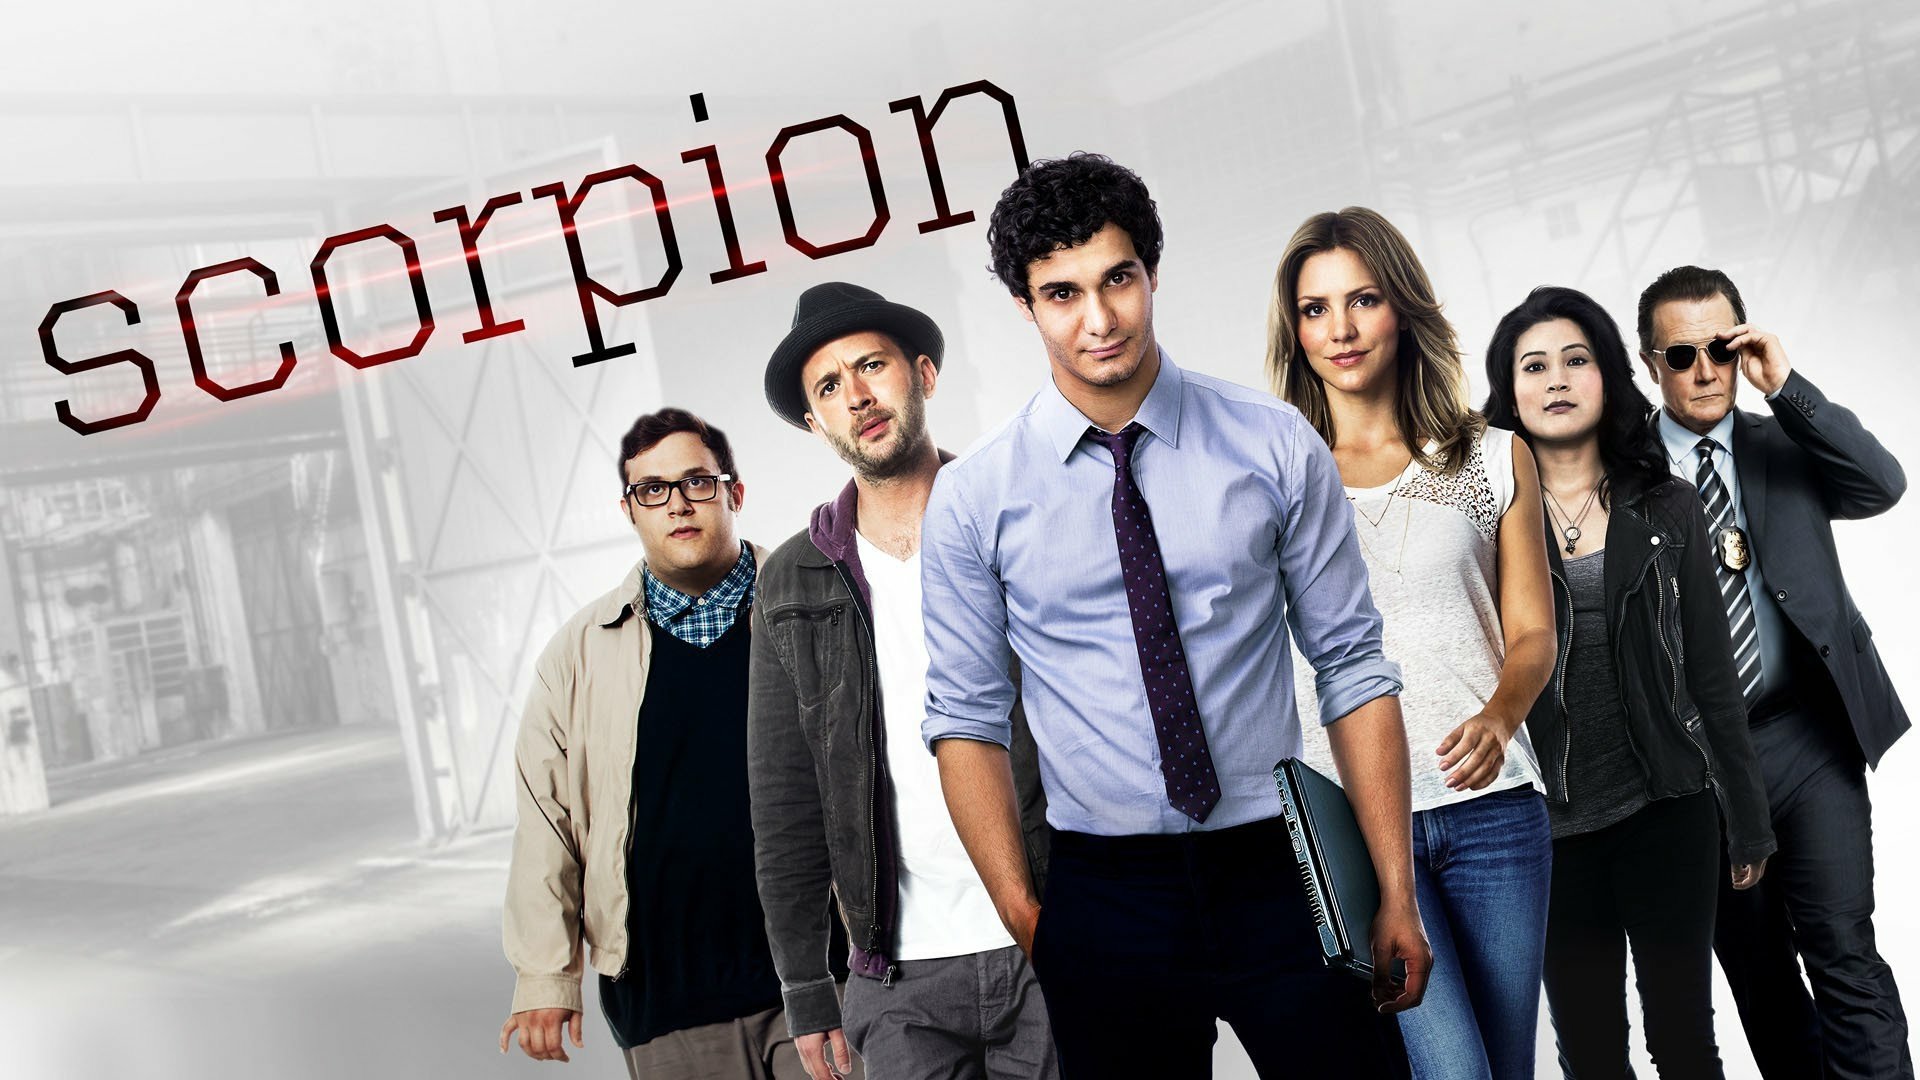 Scorpion Tv Show Cast